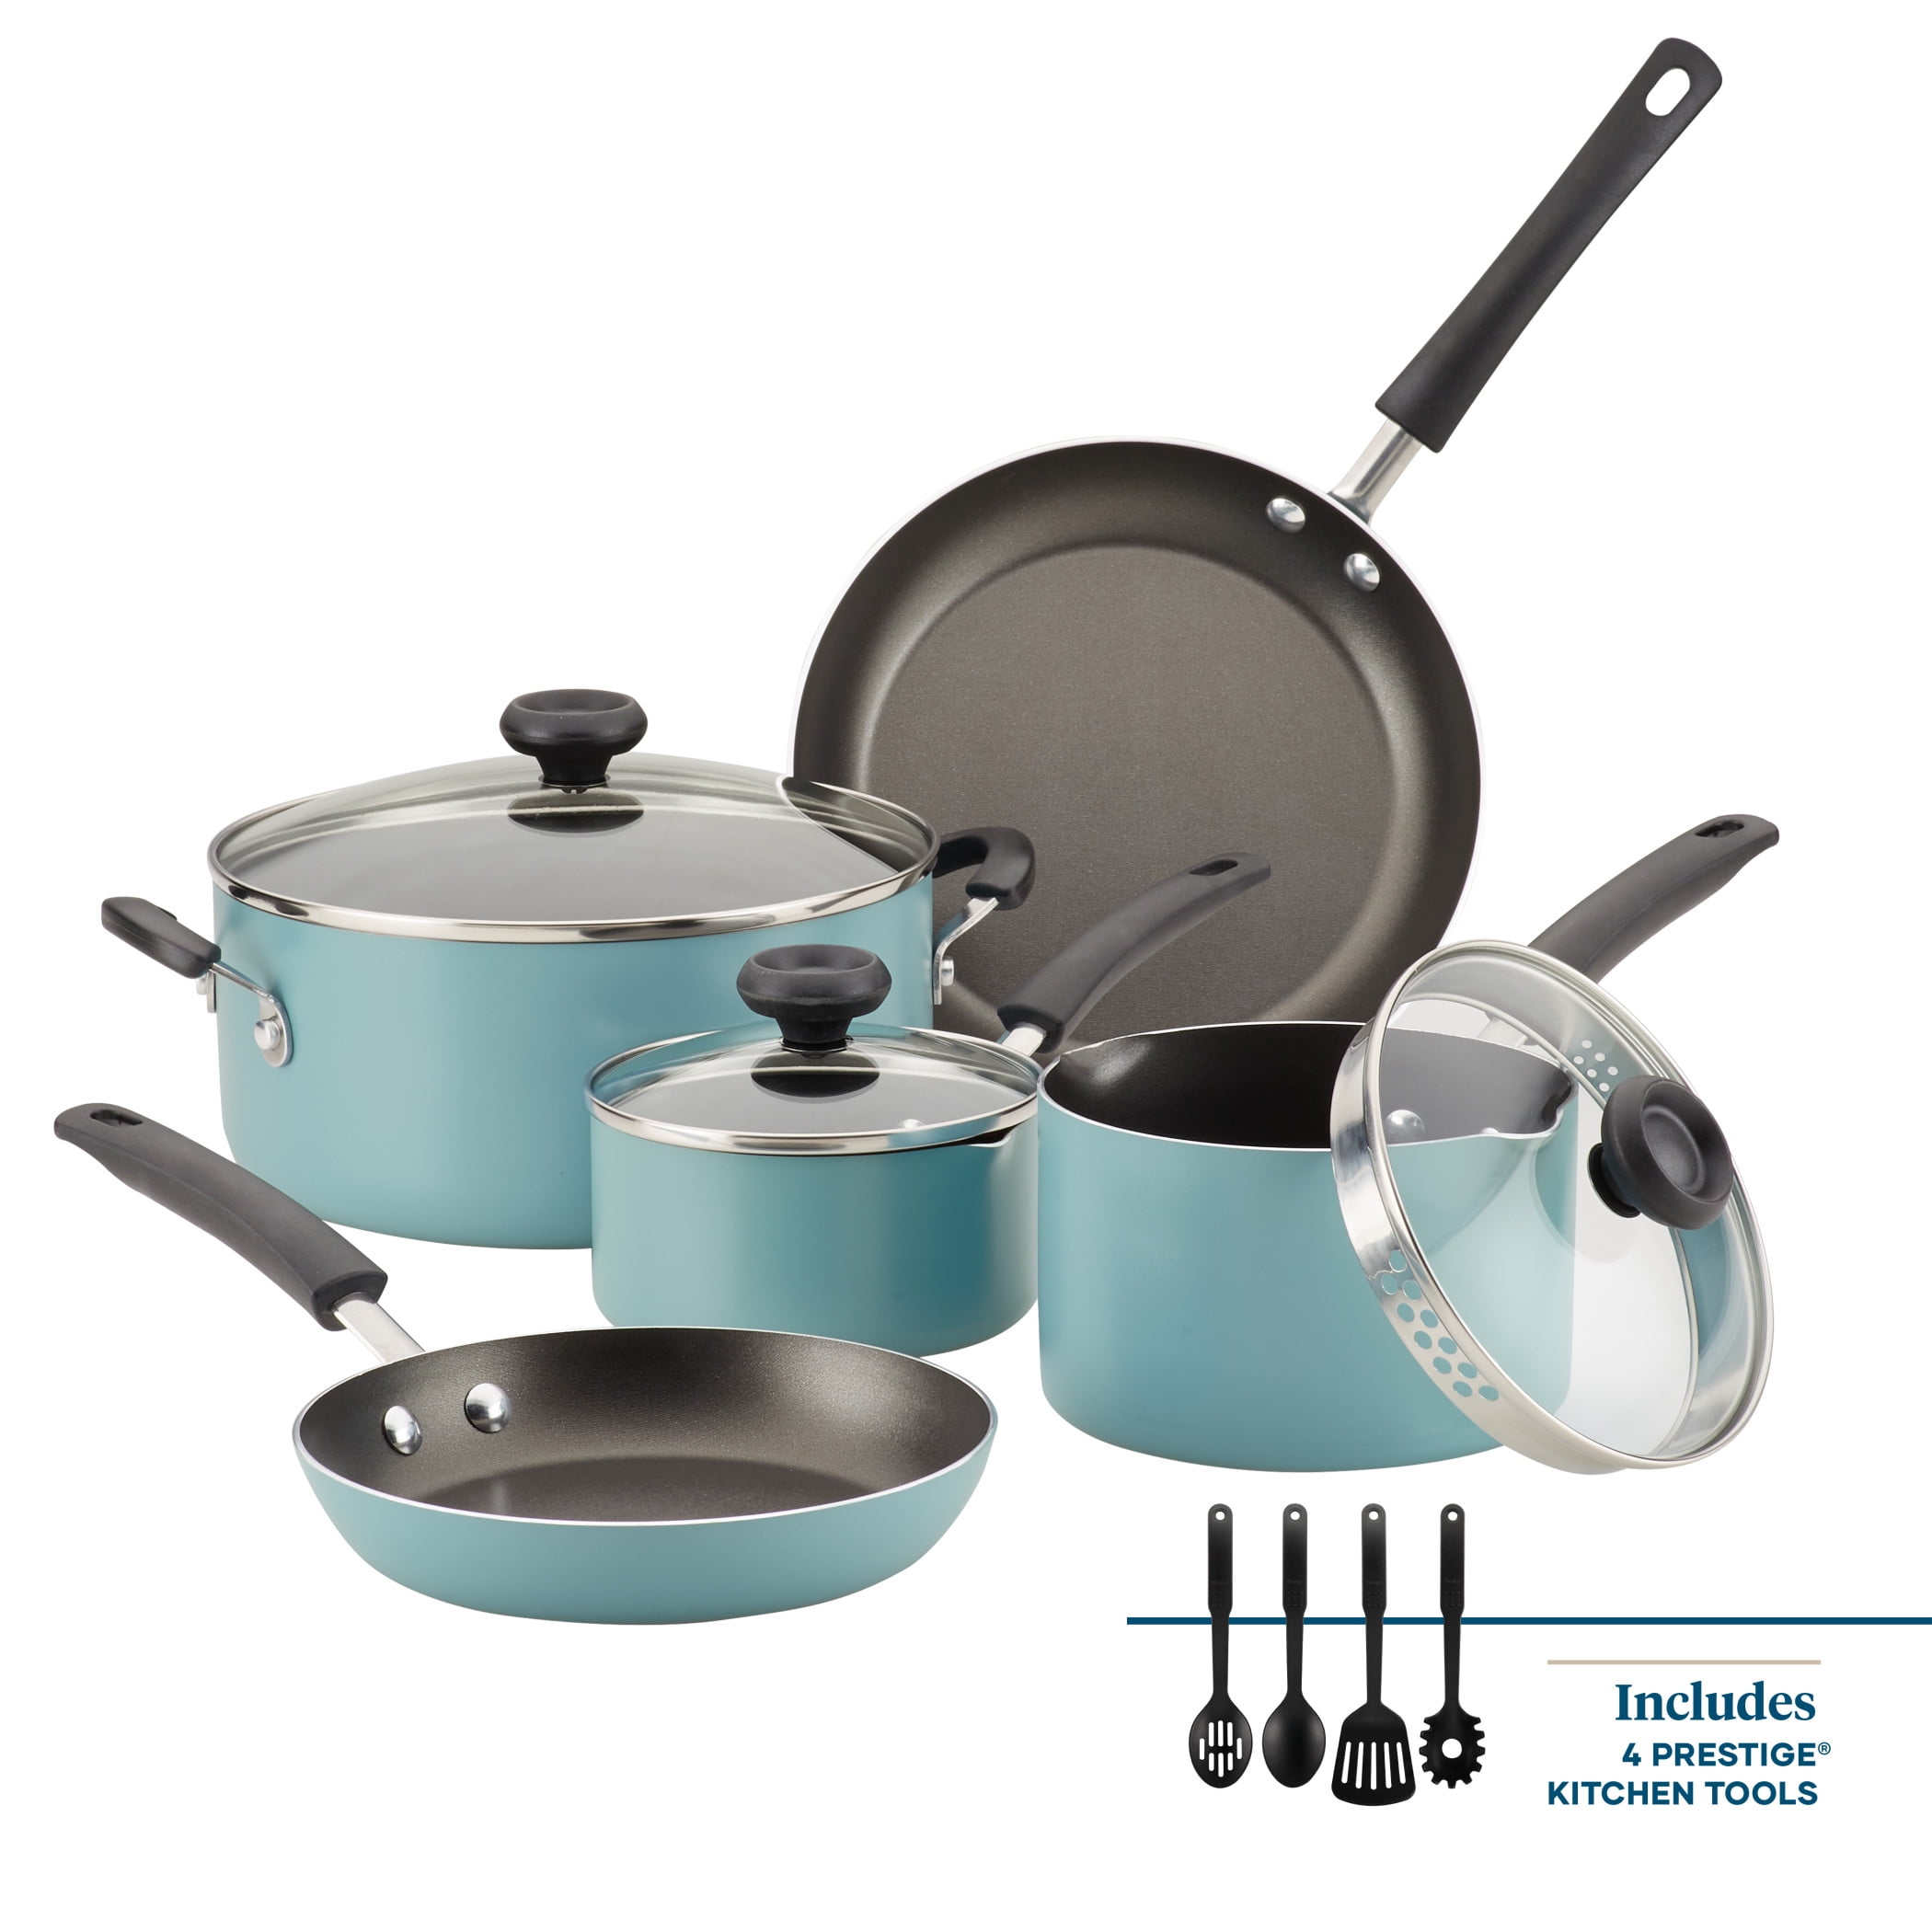 NEW Details about   9 Piece Non-Stick Cookware Set Pots & Pans Home Kitchen Cooking Champagne 